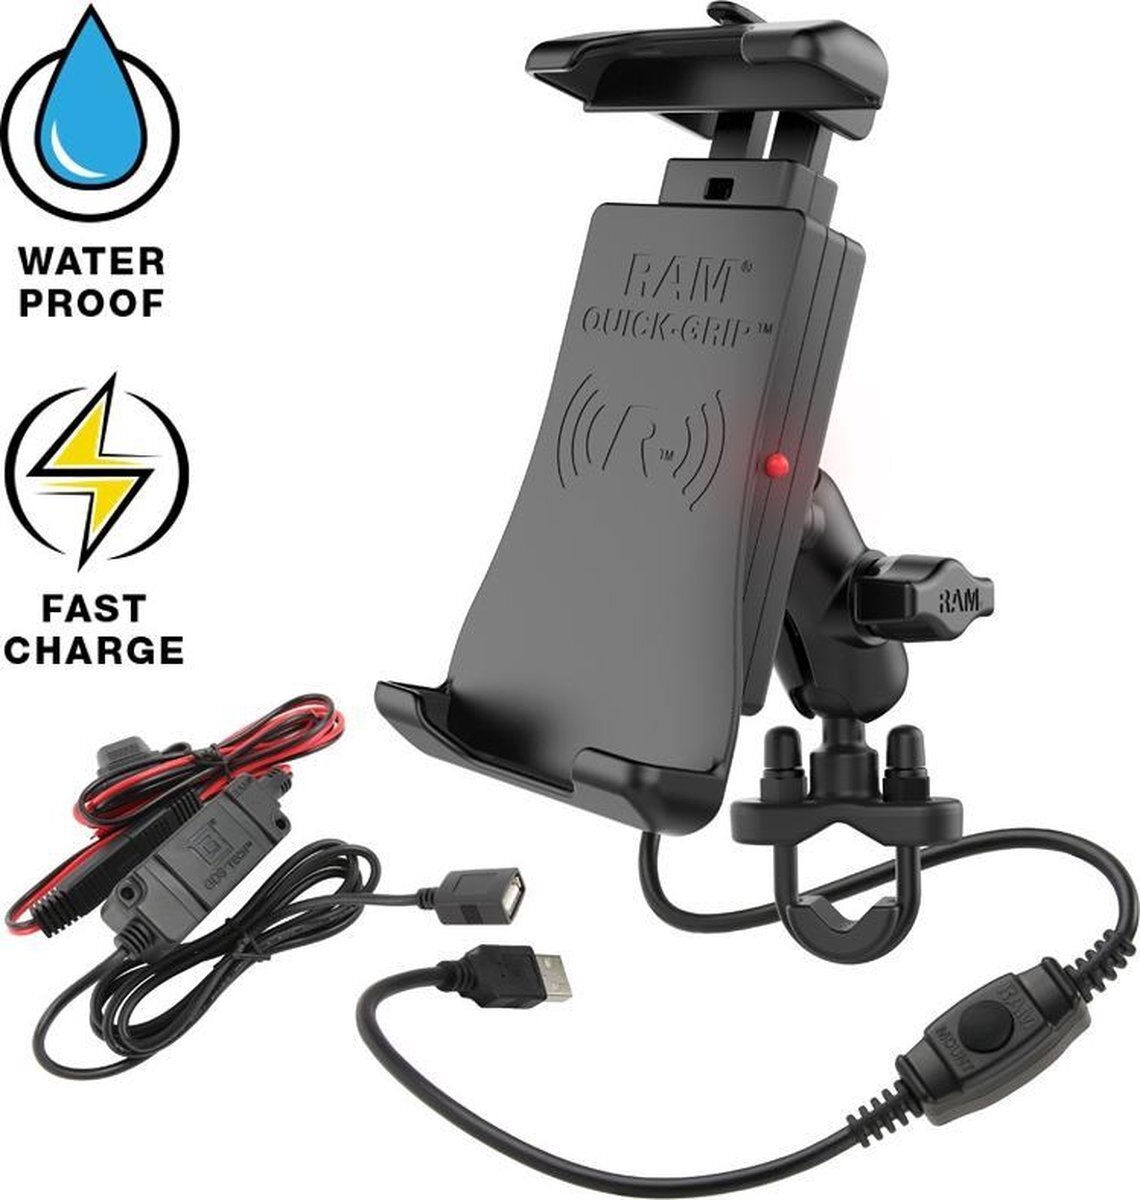 RAM Mount Tough-Chargeâ„¢ Quick-Gripâ„¢ Waterproof Wireless Charging Motorcycle Mount